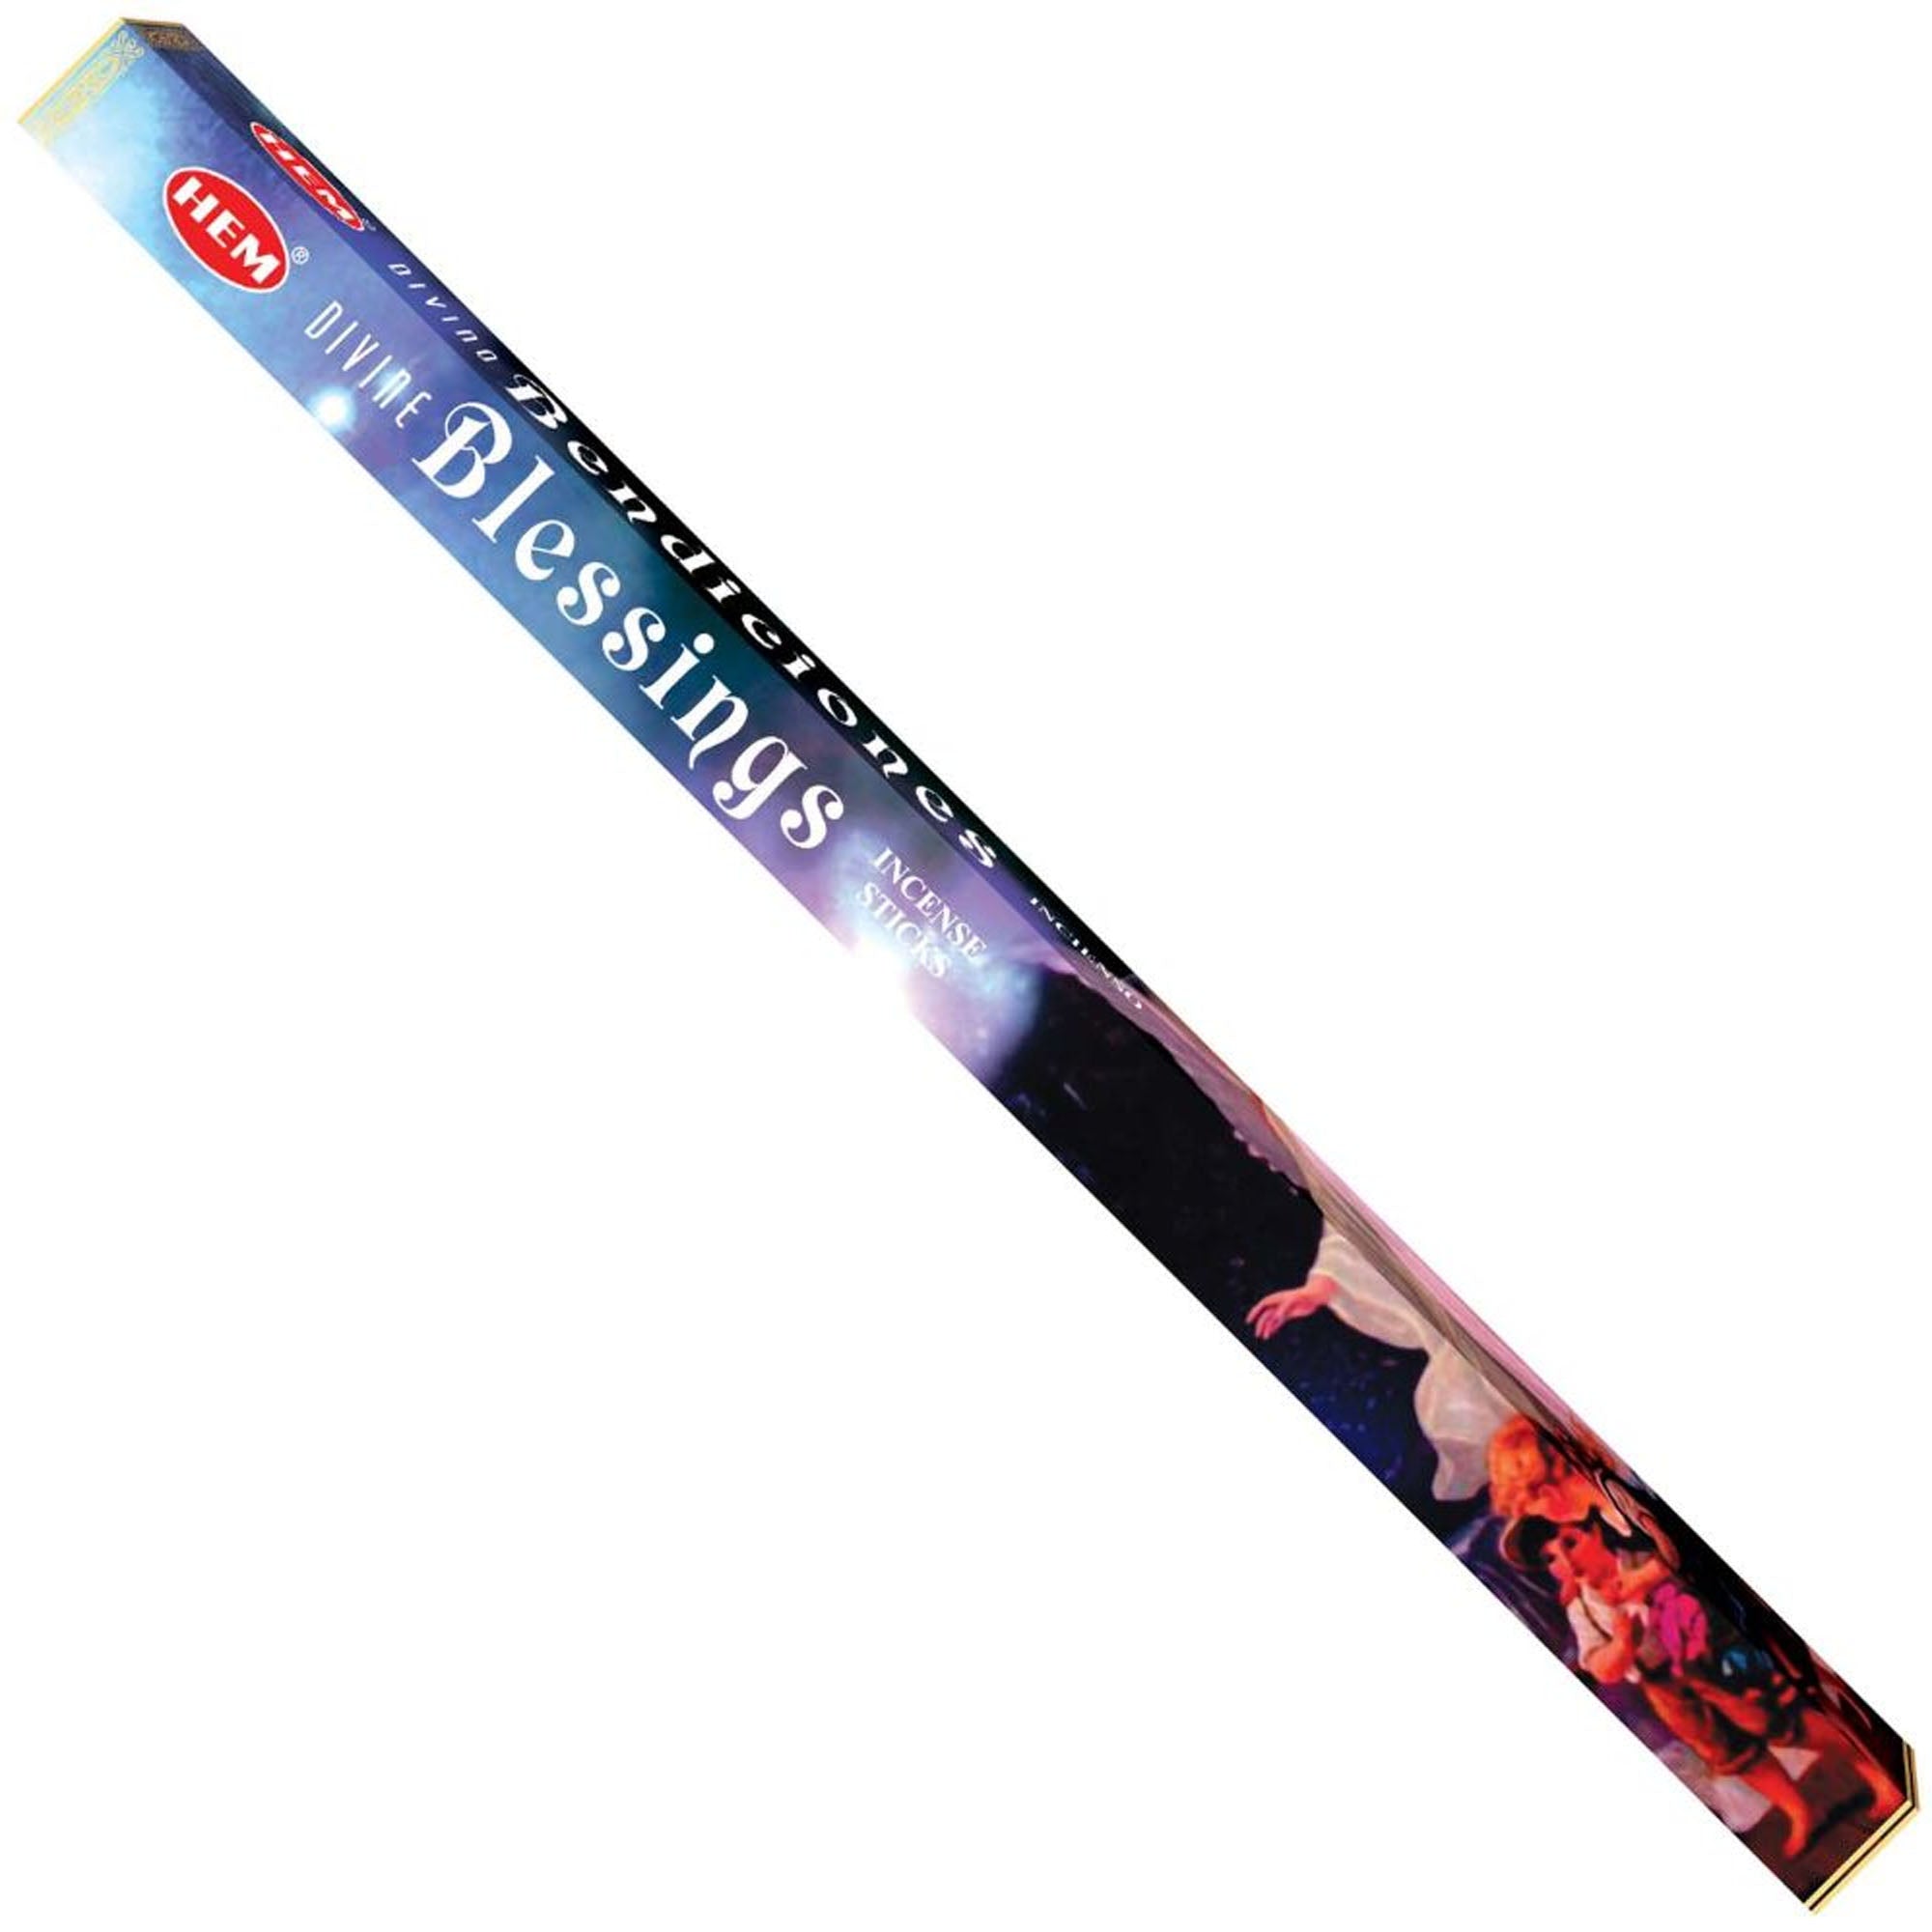 Hem - Square - Divine Blessing Incense Sticks